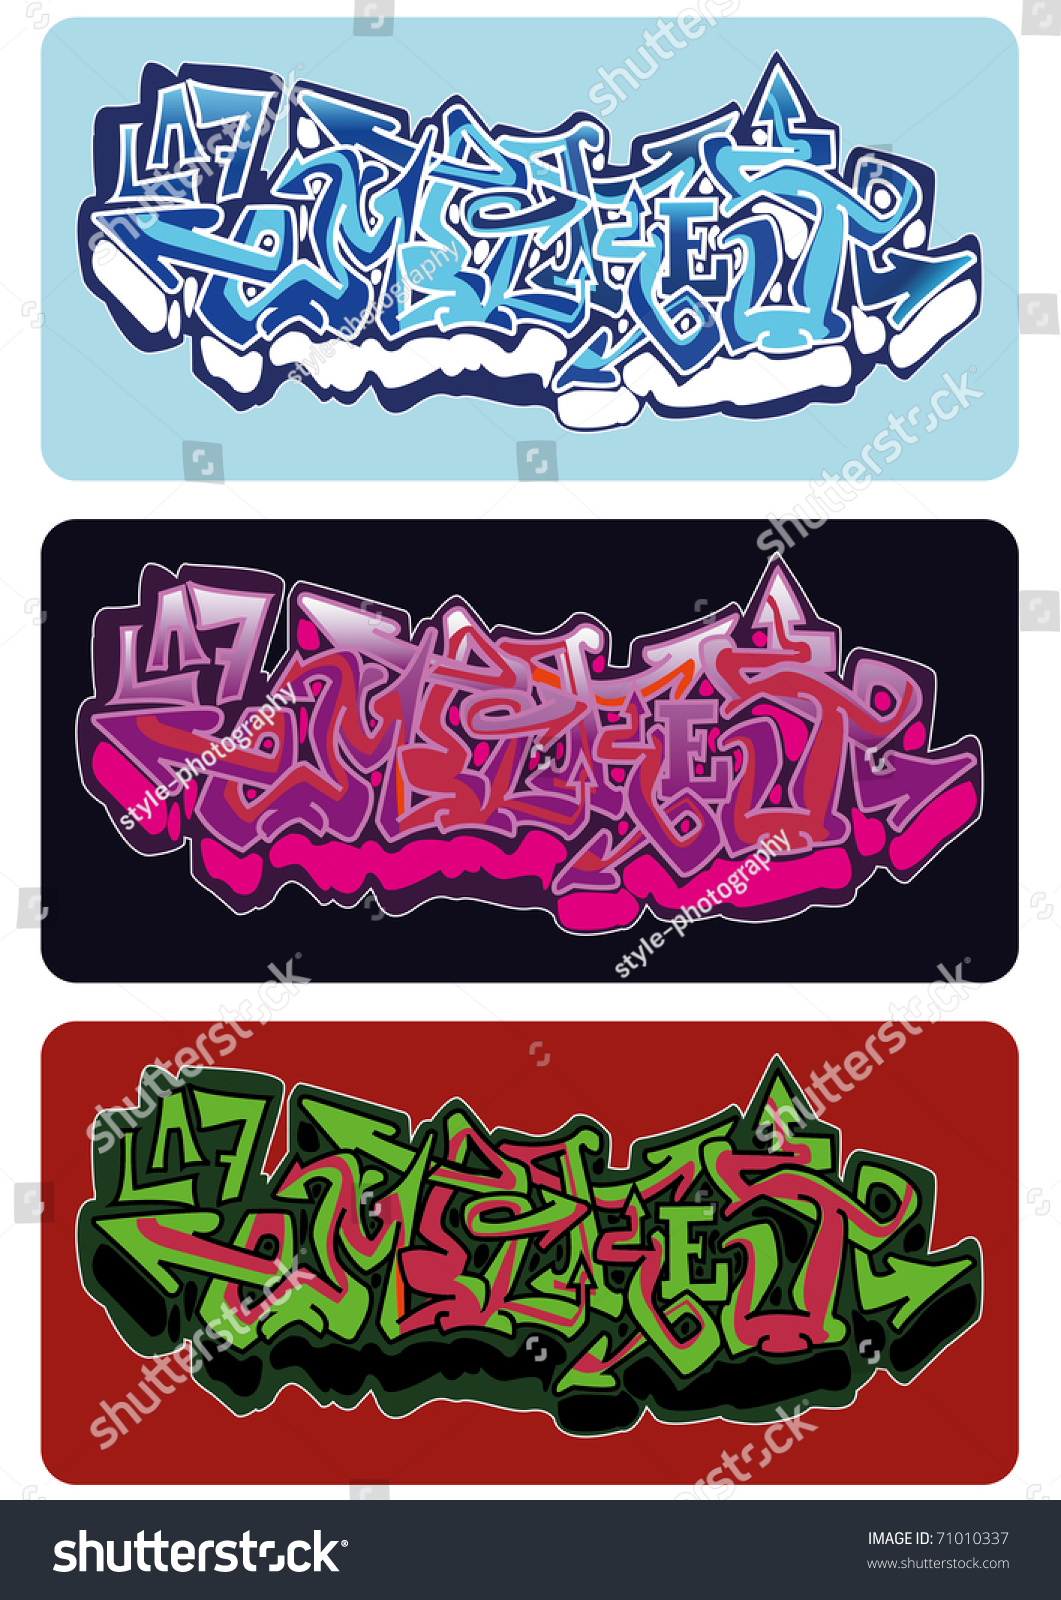 Graffiti Vector Sketch Design, Word Empire. - 71010337 : Shutterstock